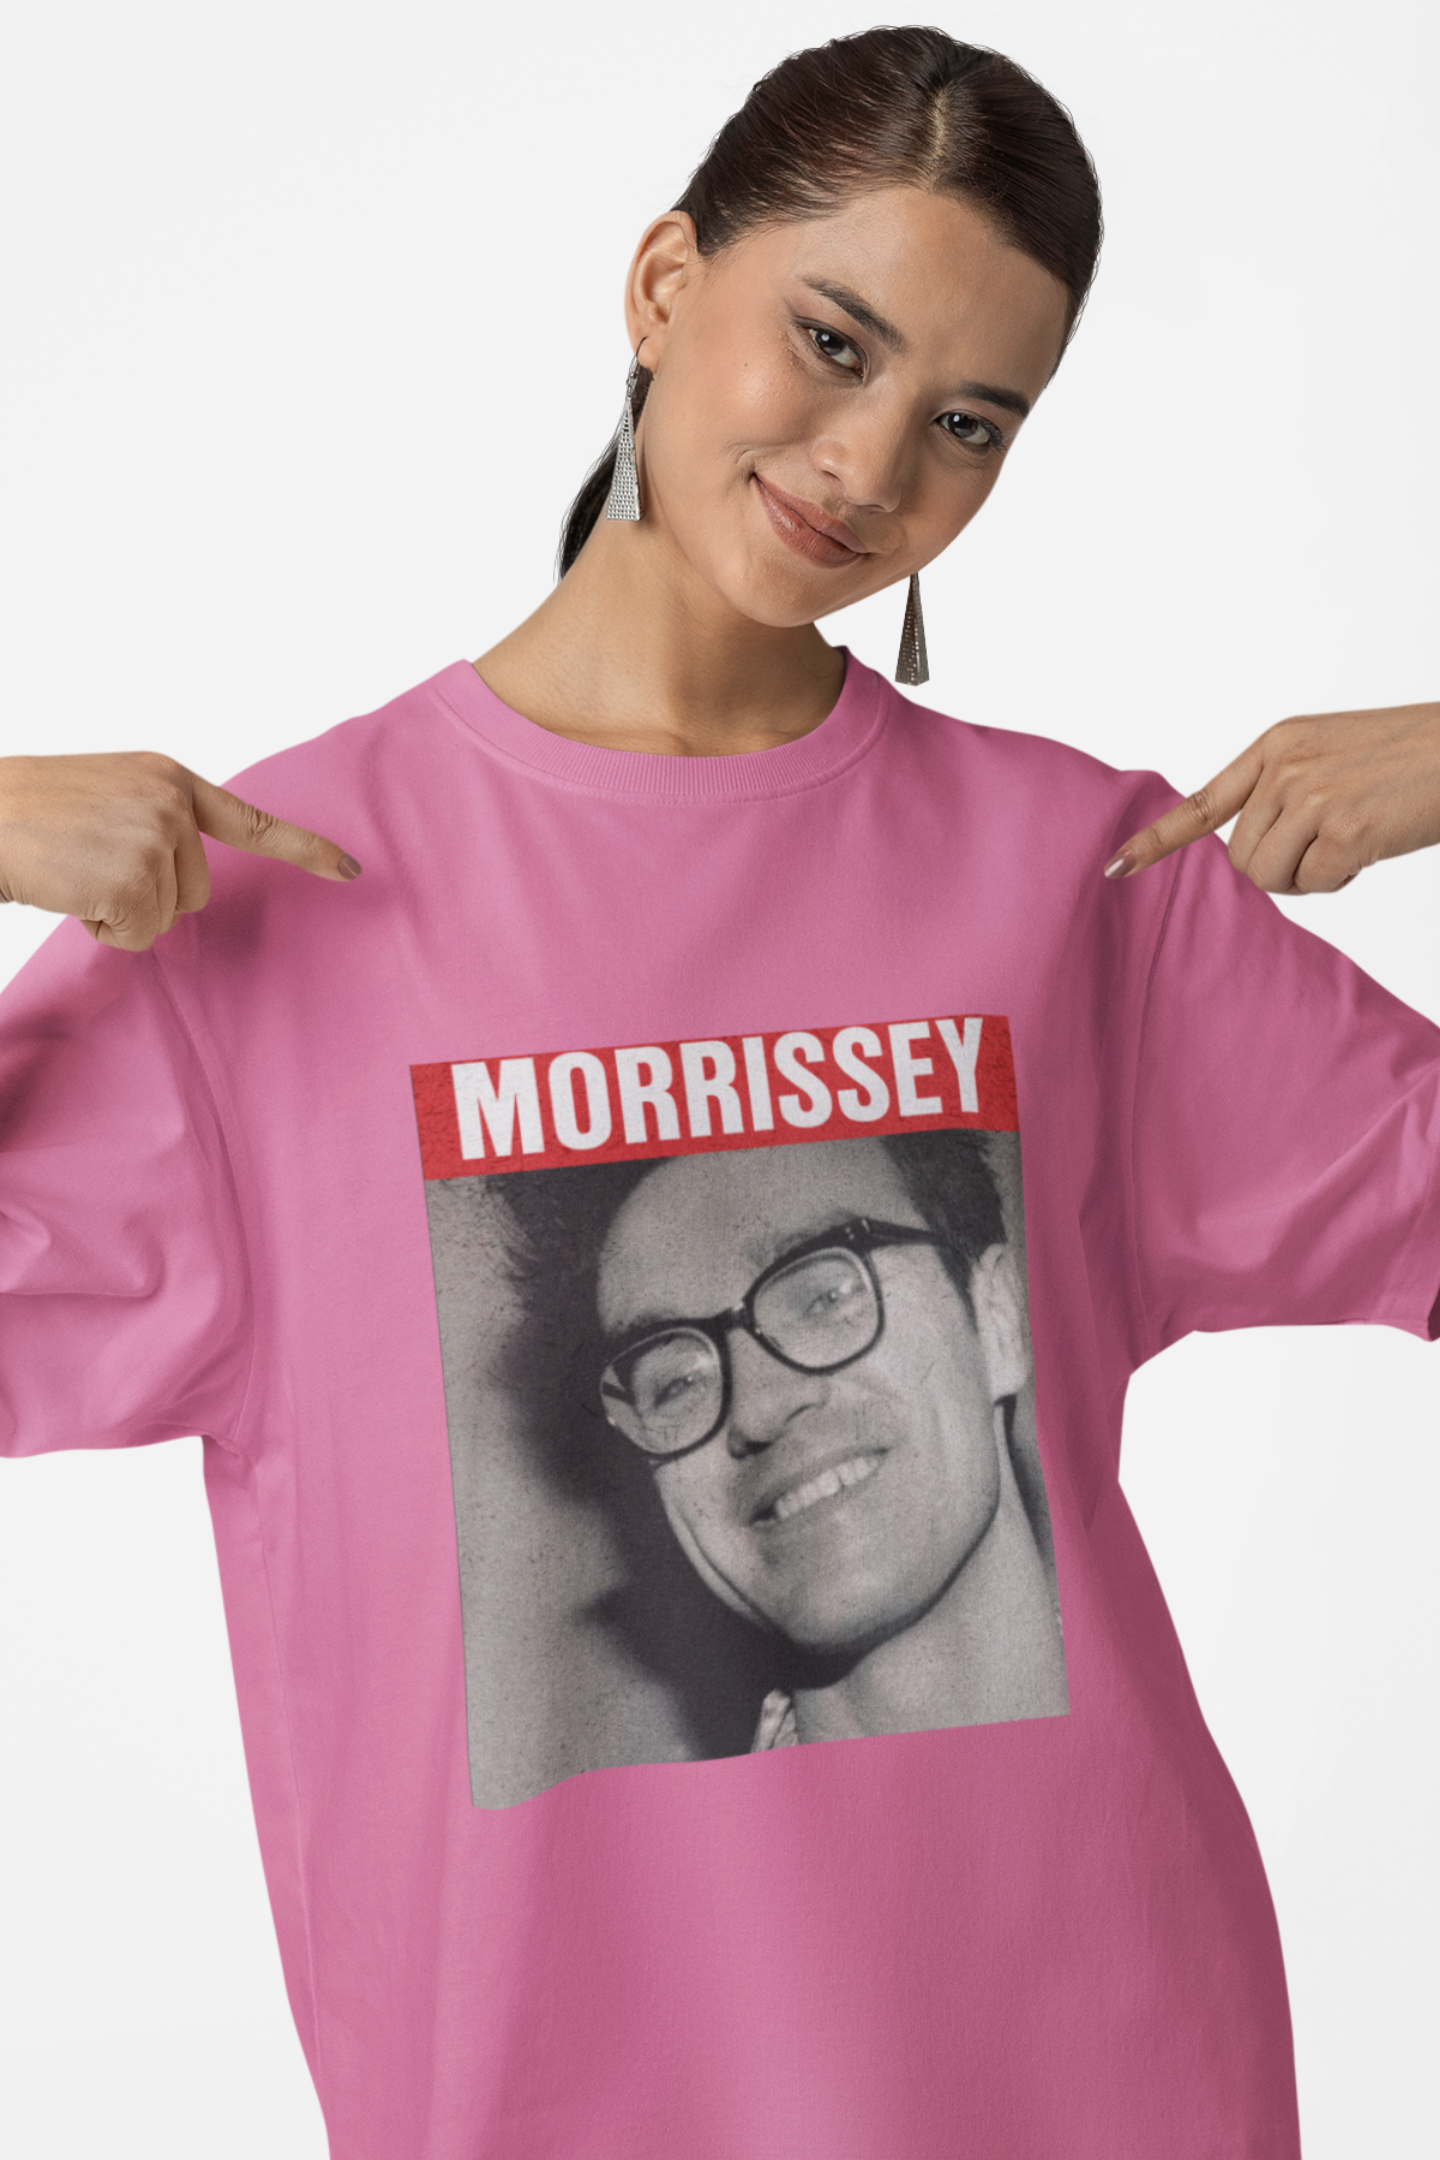 Morrissey Homage T Shirt | The Smiths Morrissey T Shirt | The Smiths Gift | Rock and Roll | Morrissey T Shirt